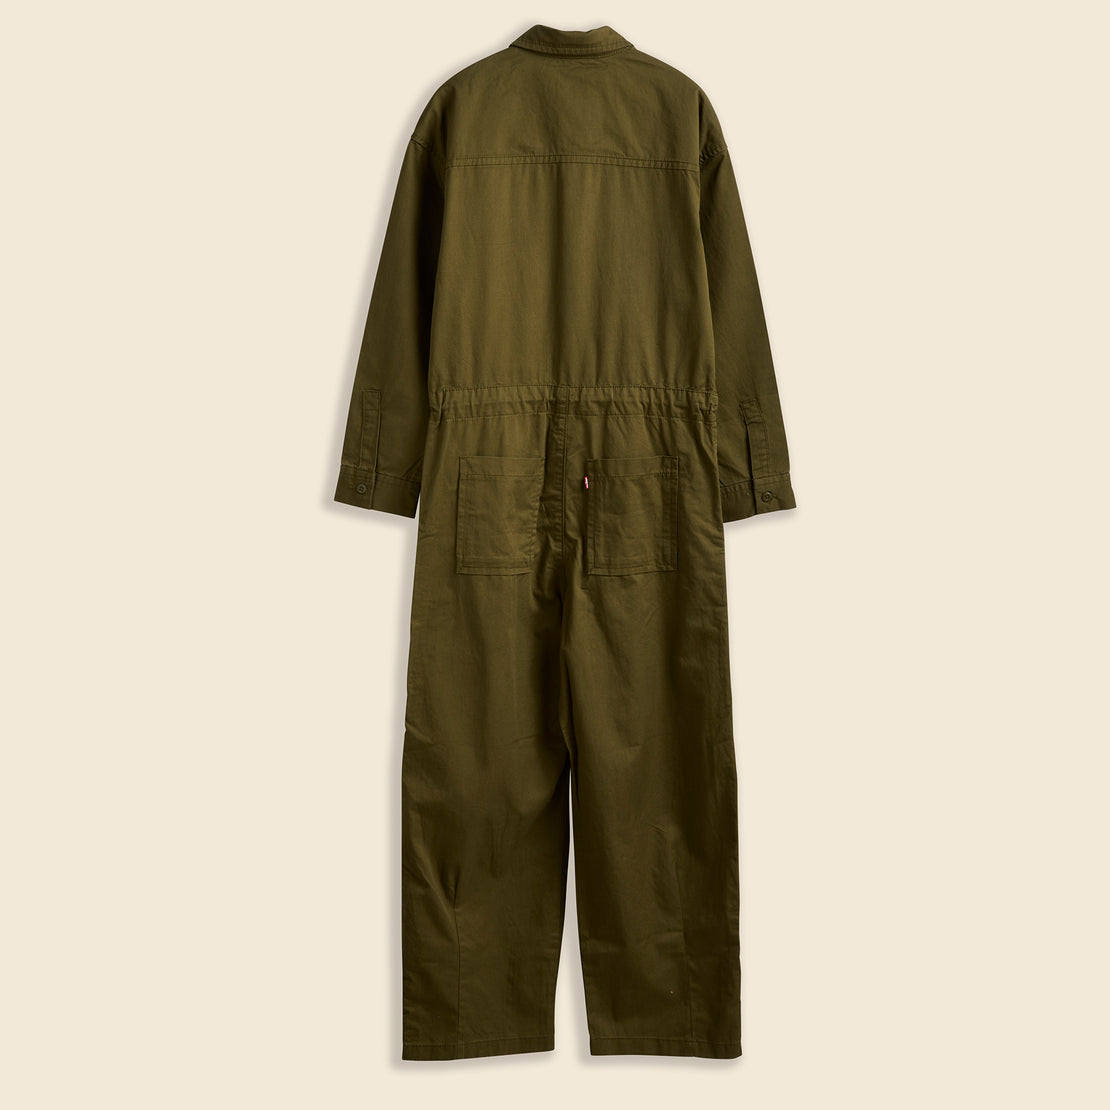 Baggy Surplus Jumpsuit - Dark Olive - Levis Premium - STAG Provisions - W - Onepiece - Jumpsuit